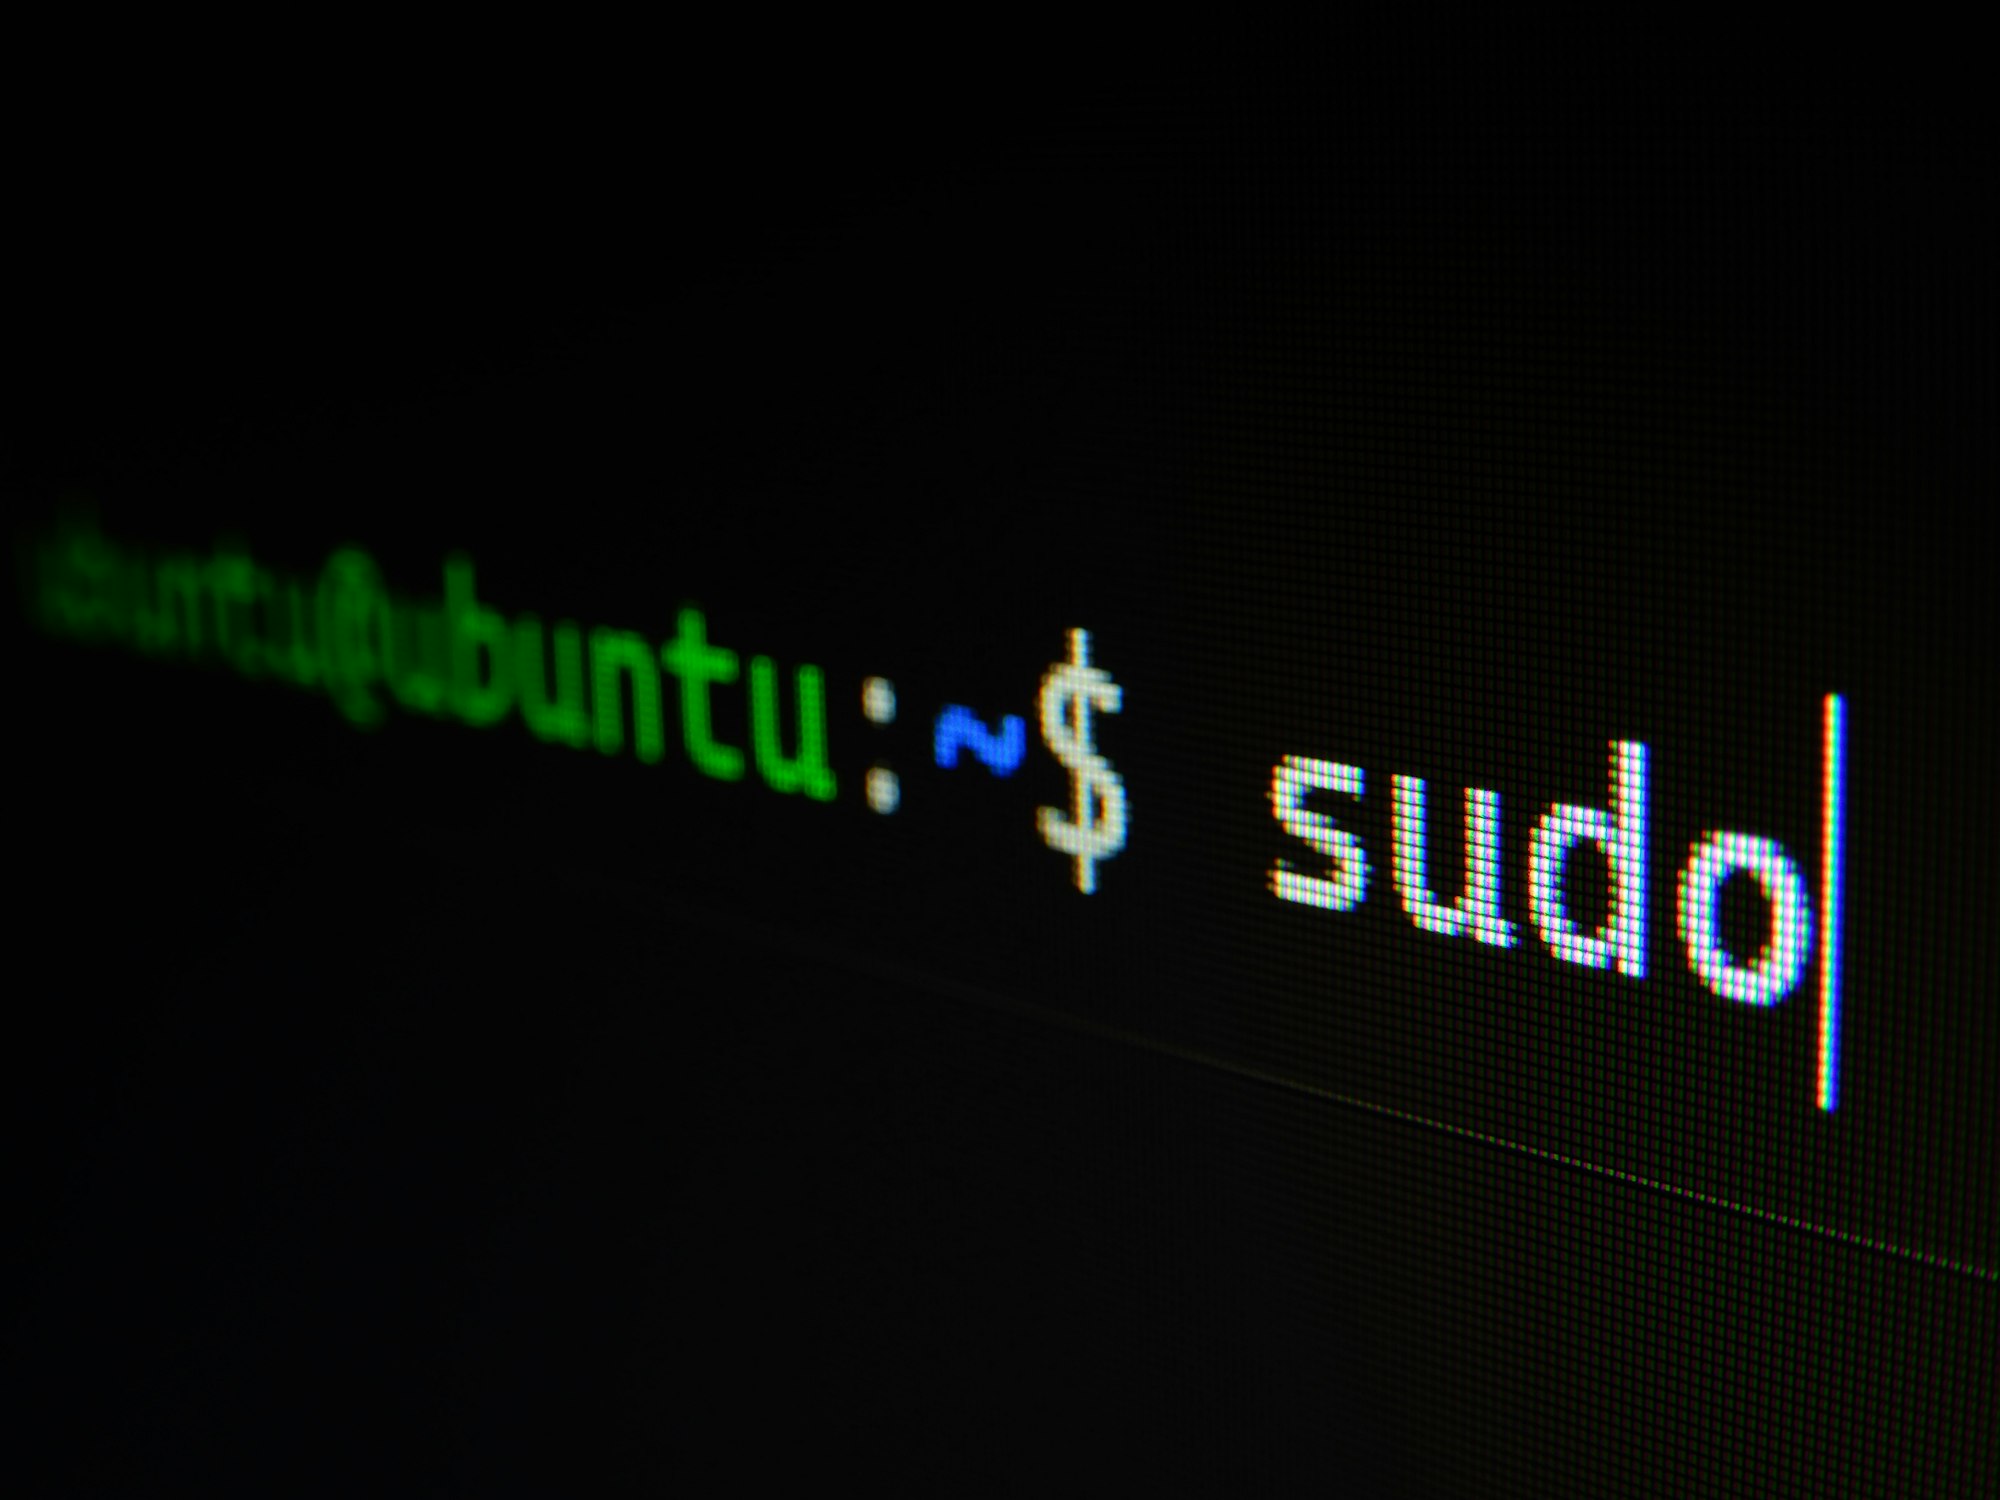 Solución al problema "sudo: command not found" en Linux